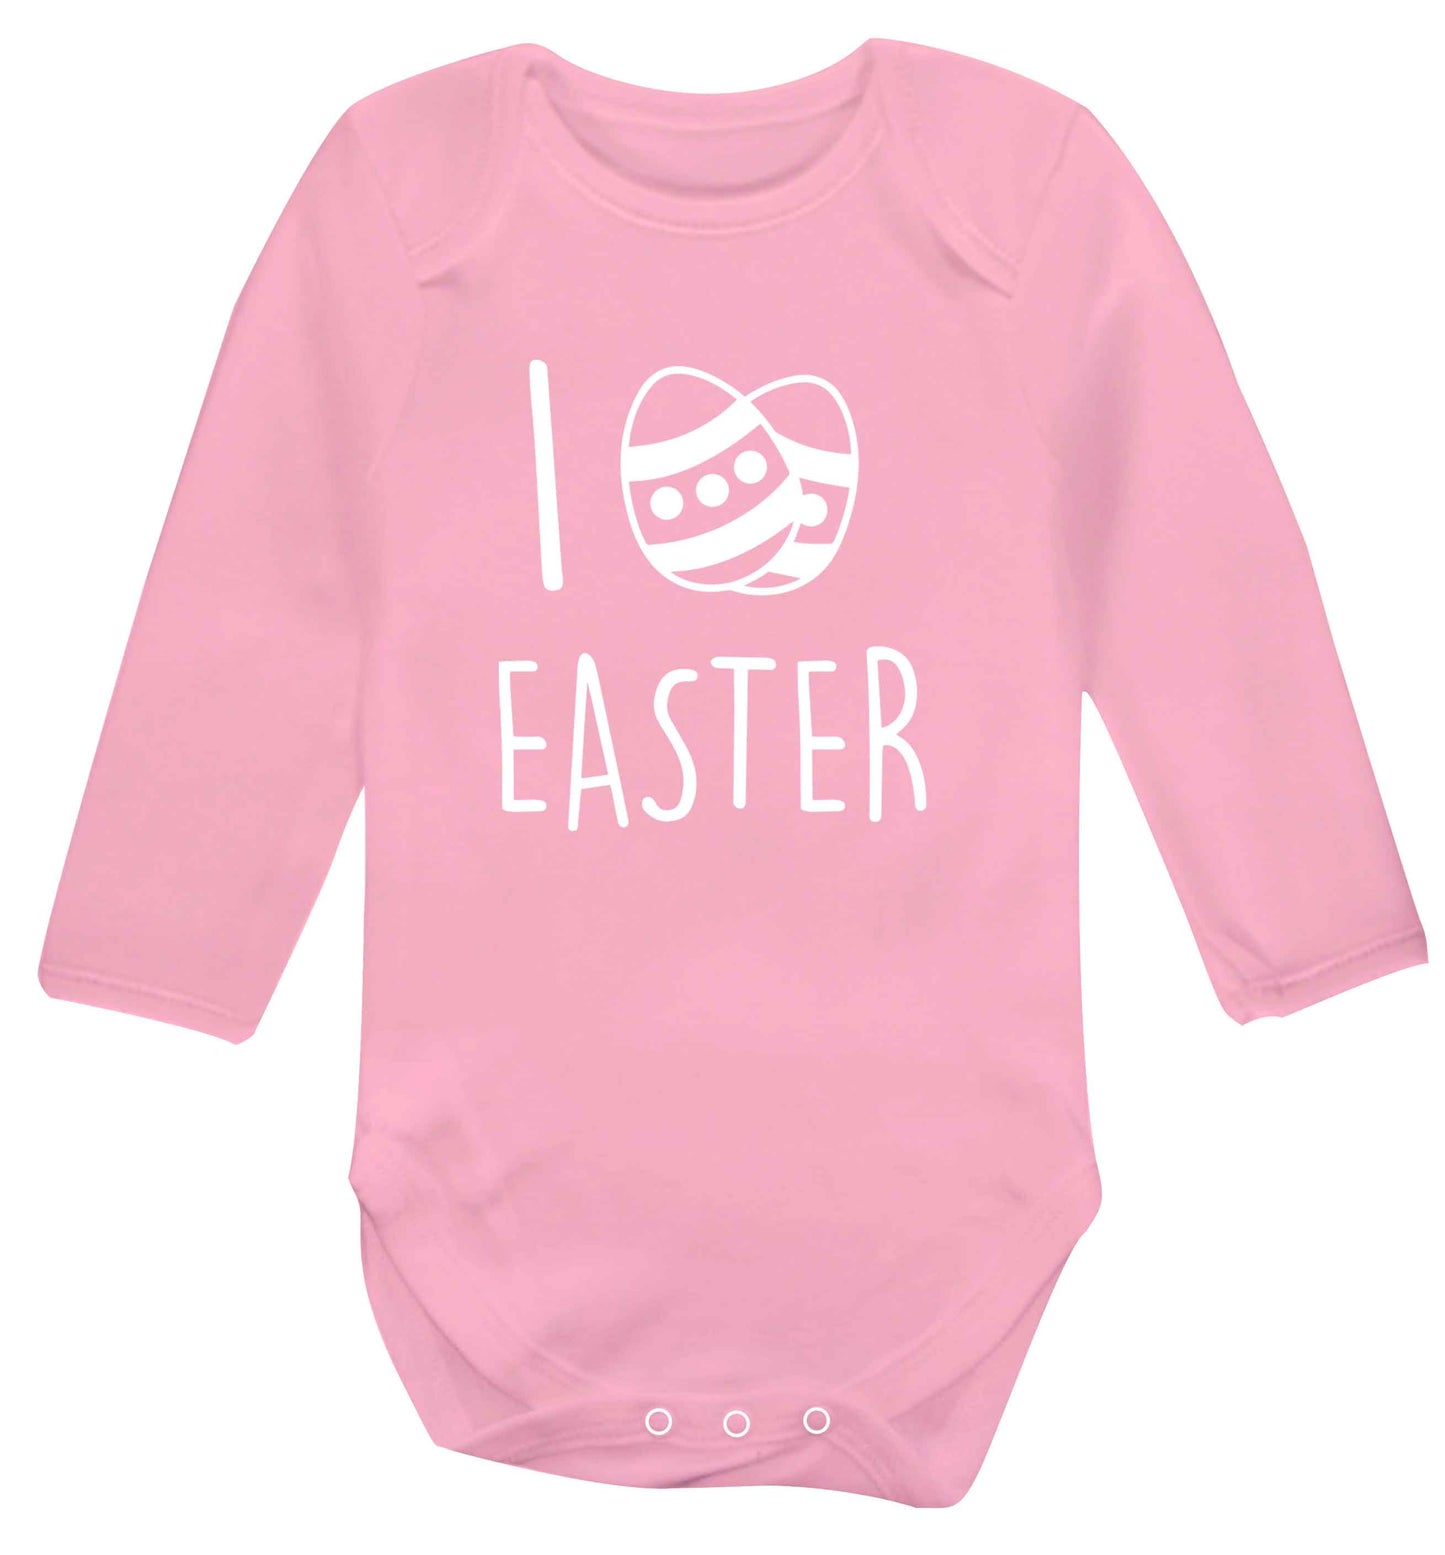 I love Easter baby vest long sleeved pale pink 6-12 months